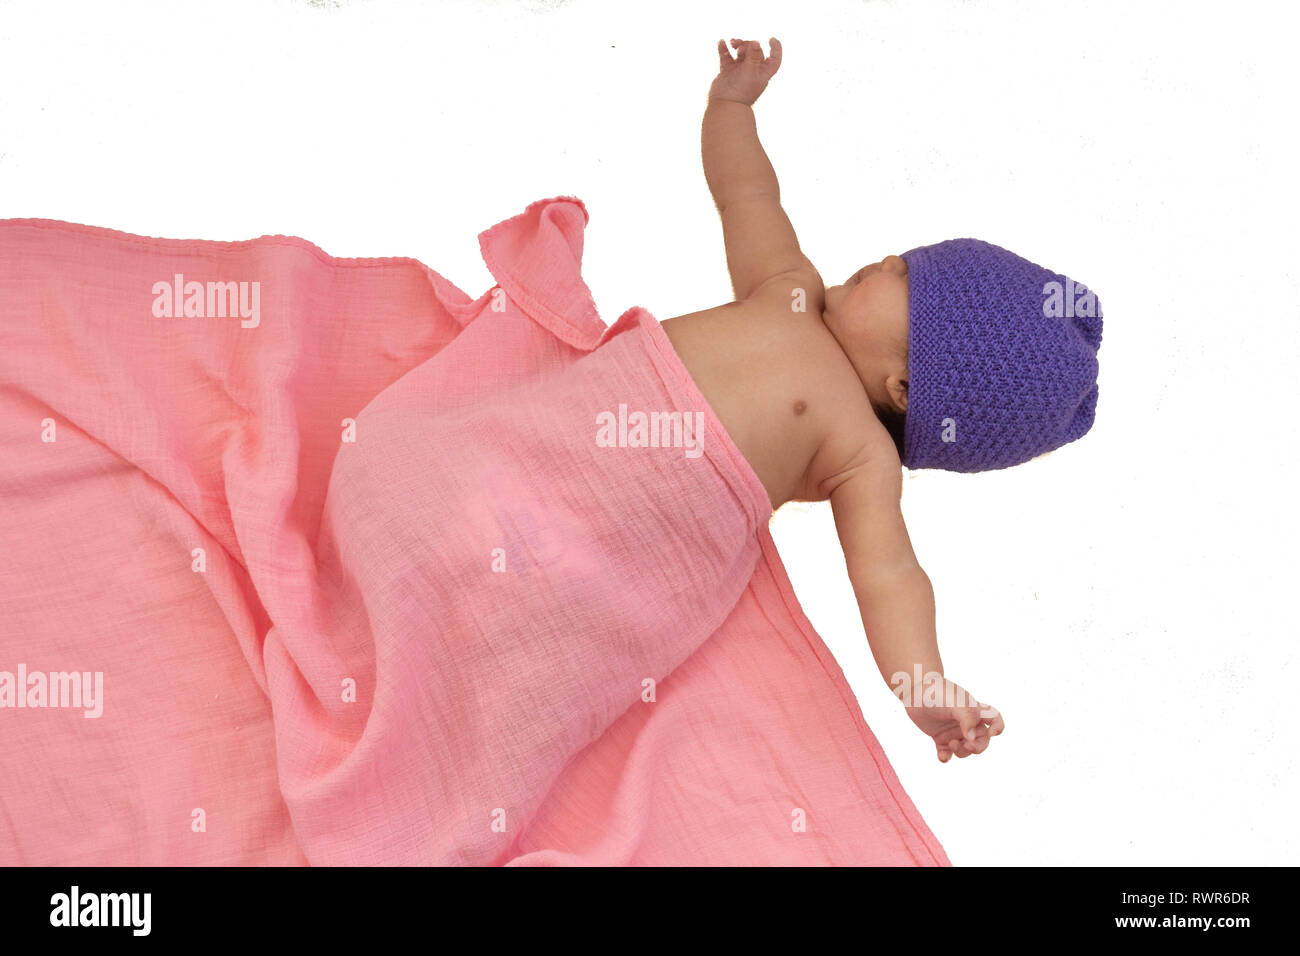 Infant in purple cap Stock Photo